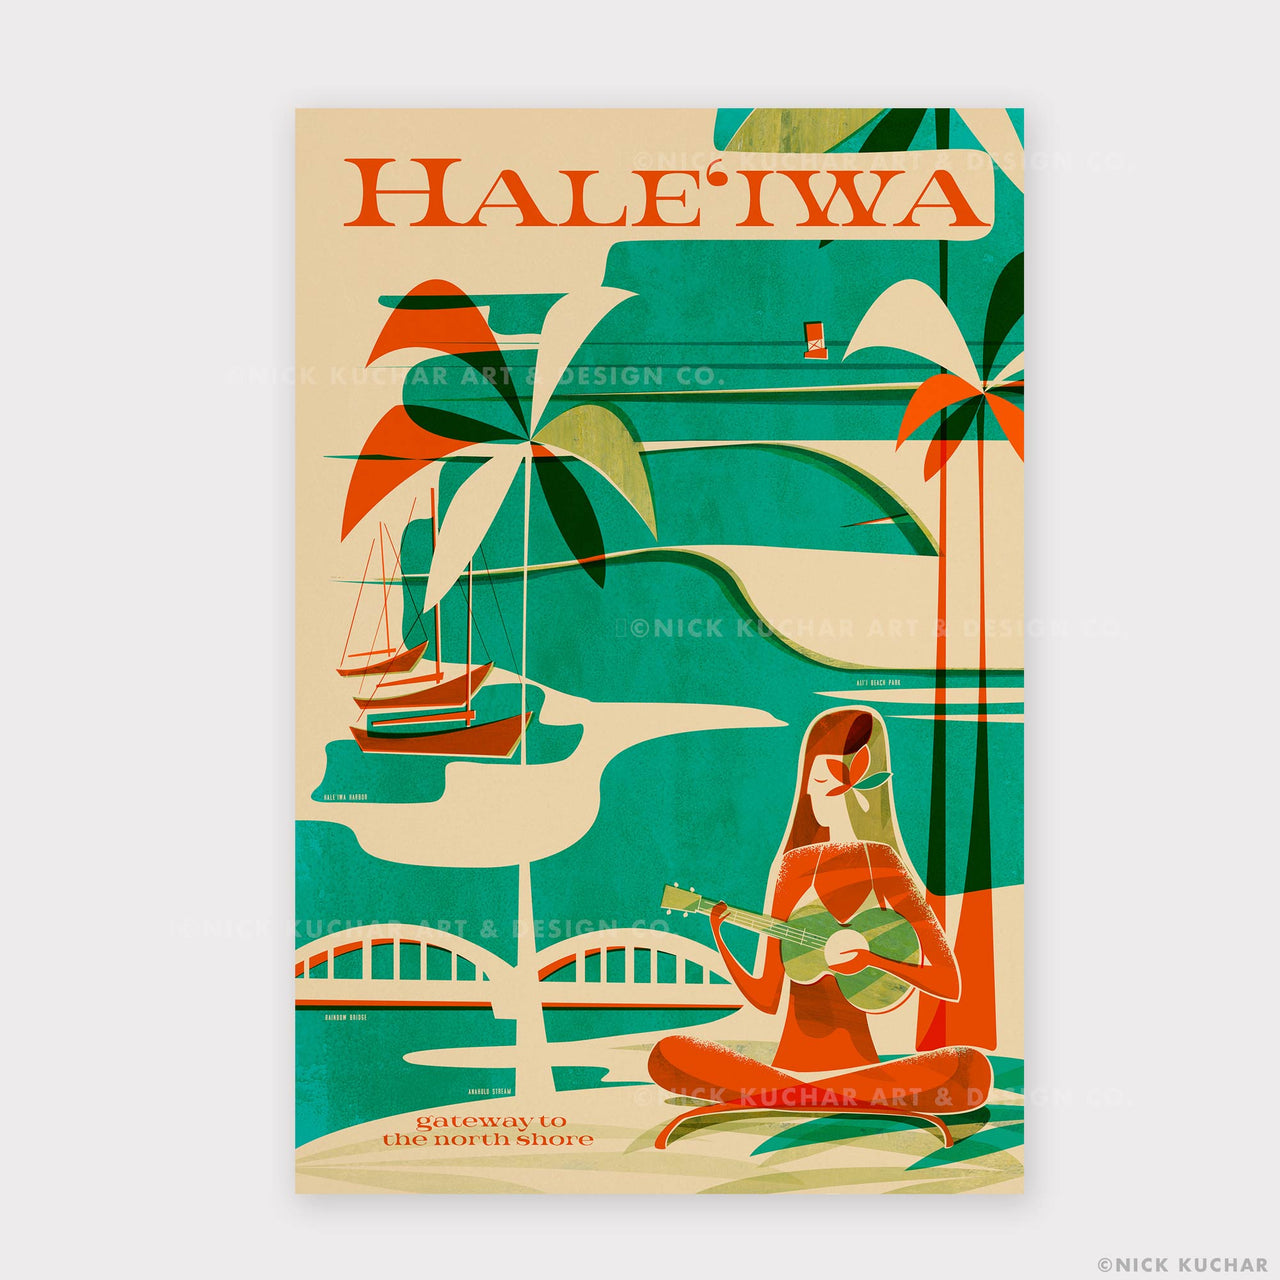 Hanapepe Swinging Bridge - 12x18 Travel Hawaii Print